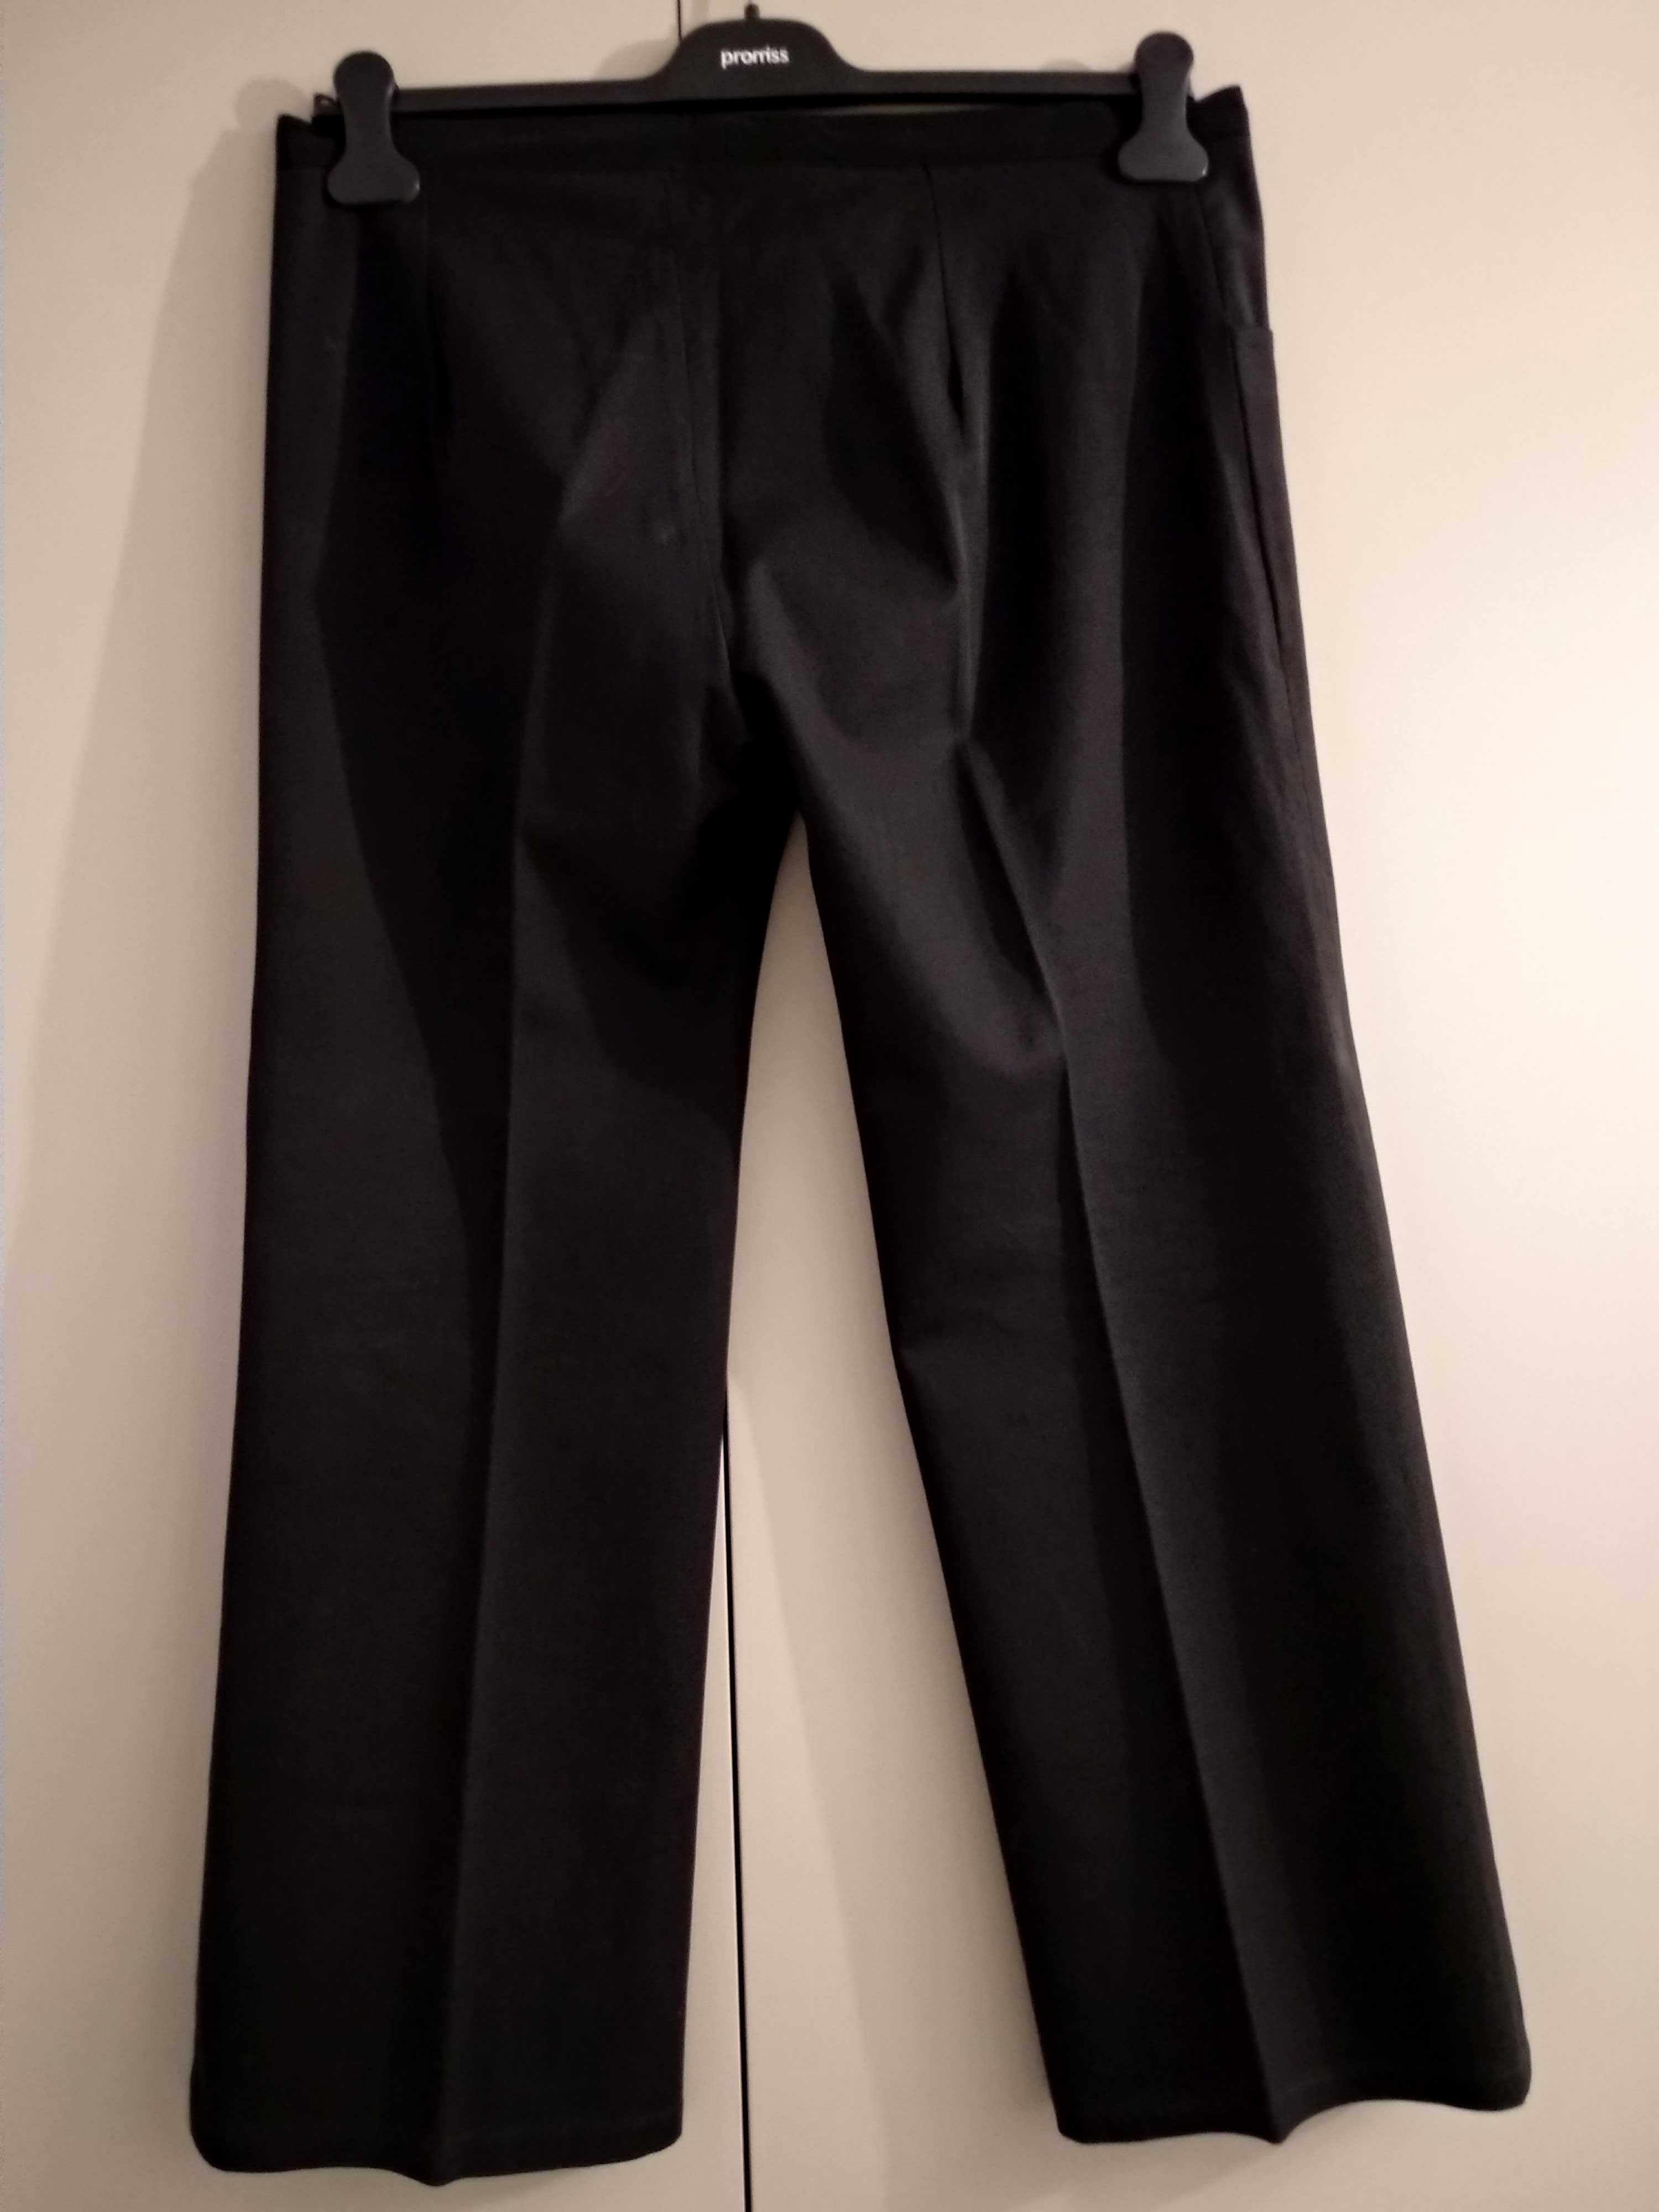 Spodnie  materiałowe, czarne, rozmiar 50, pas 93 cm.